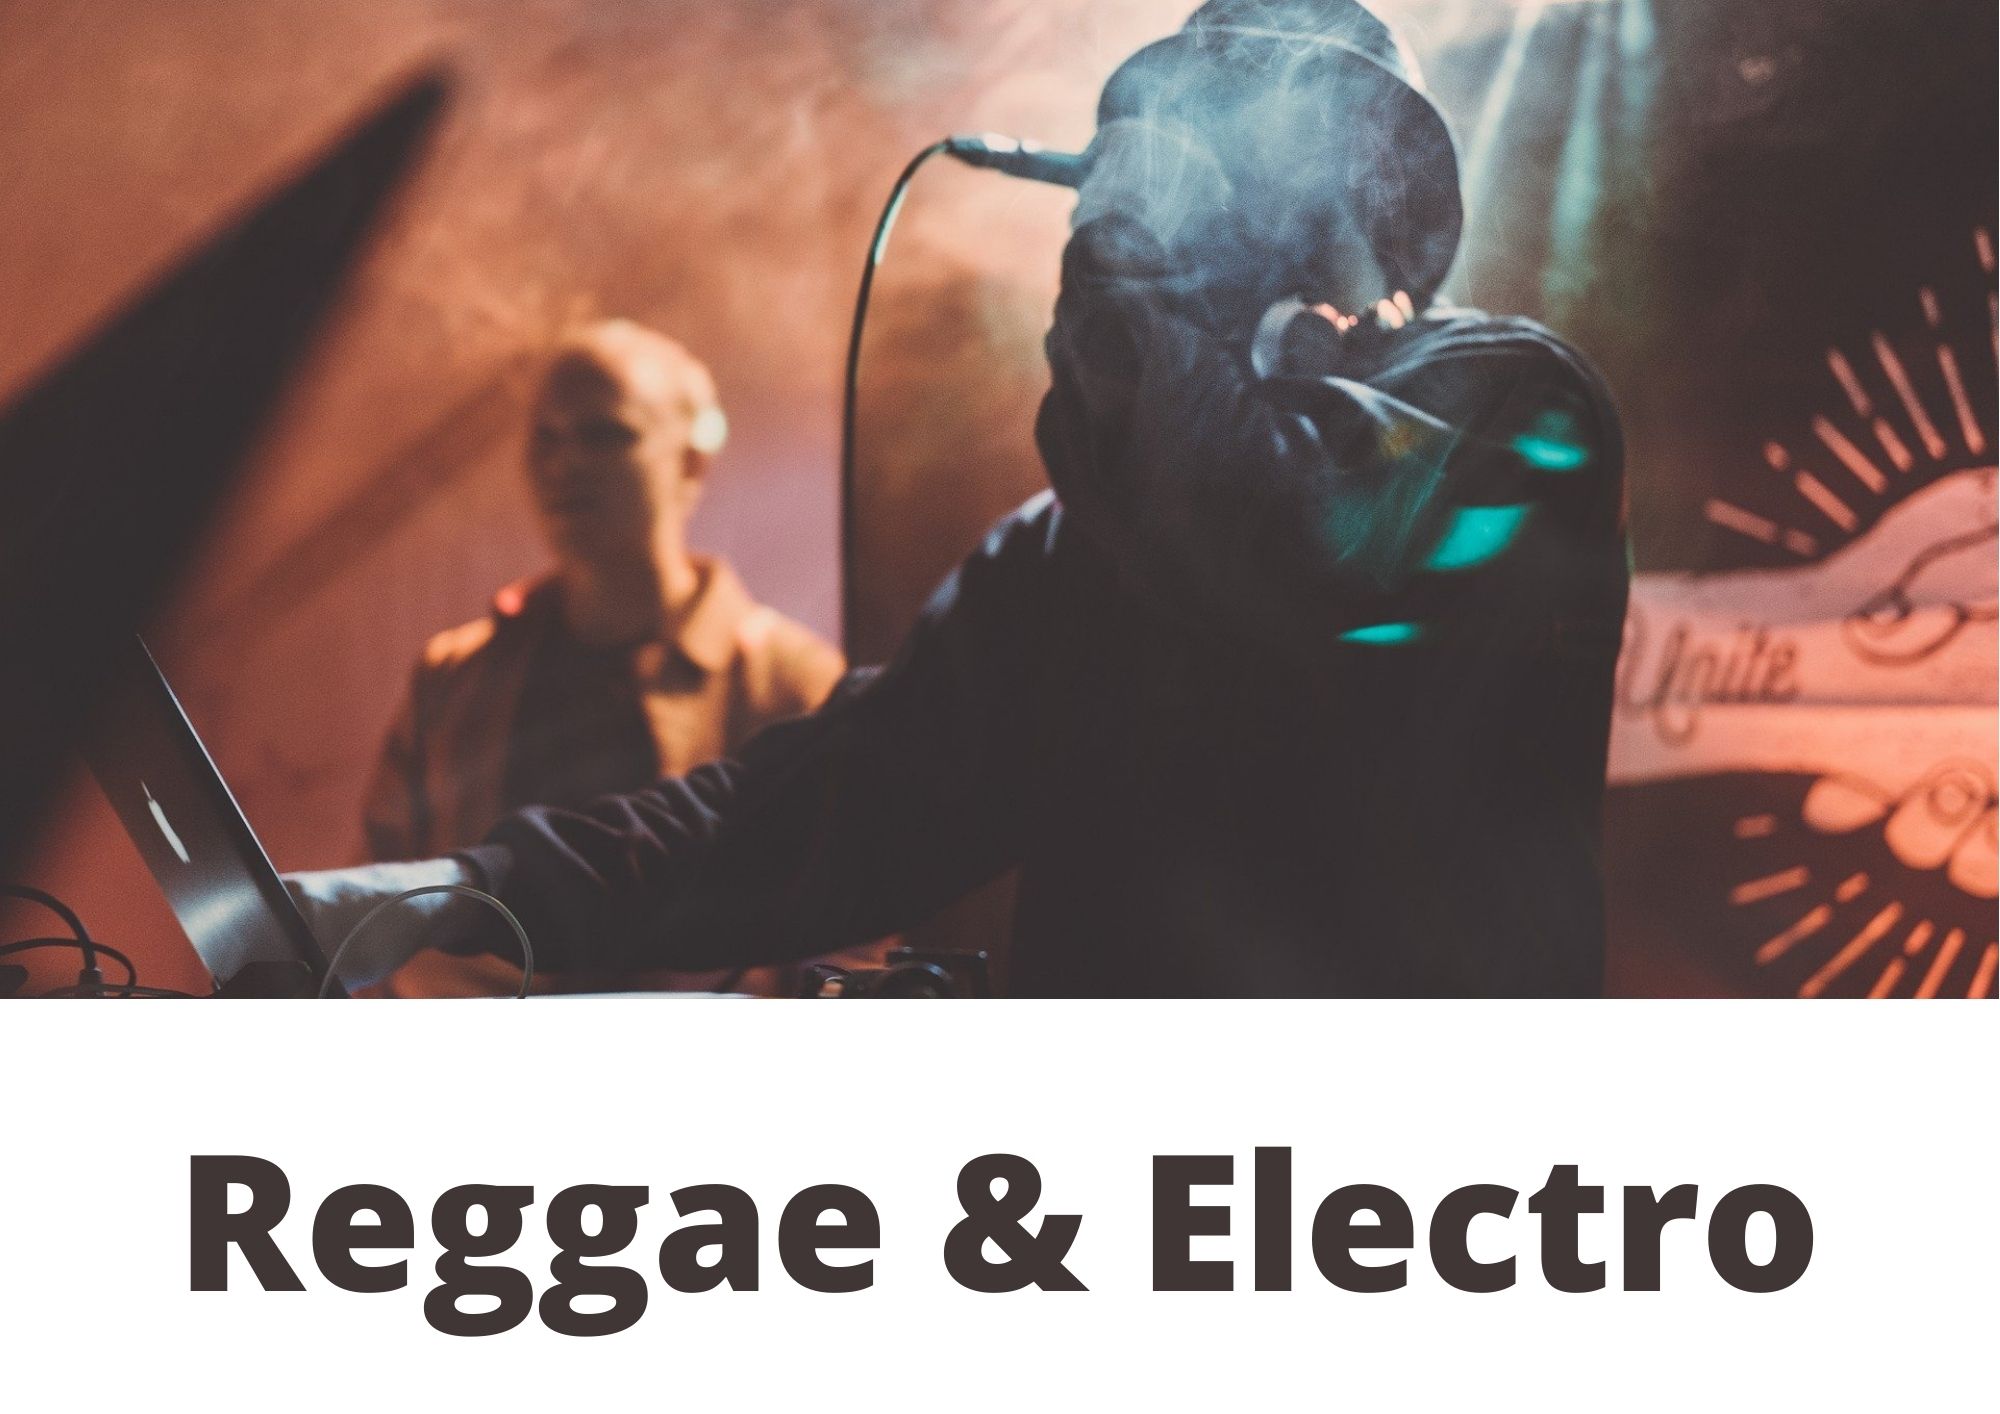 Reggae electro